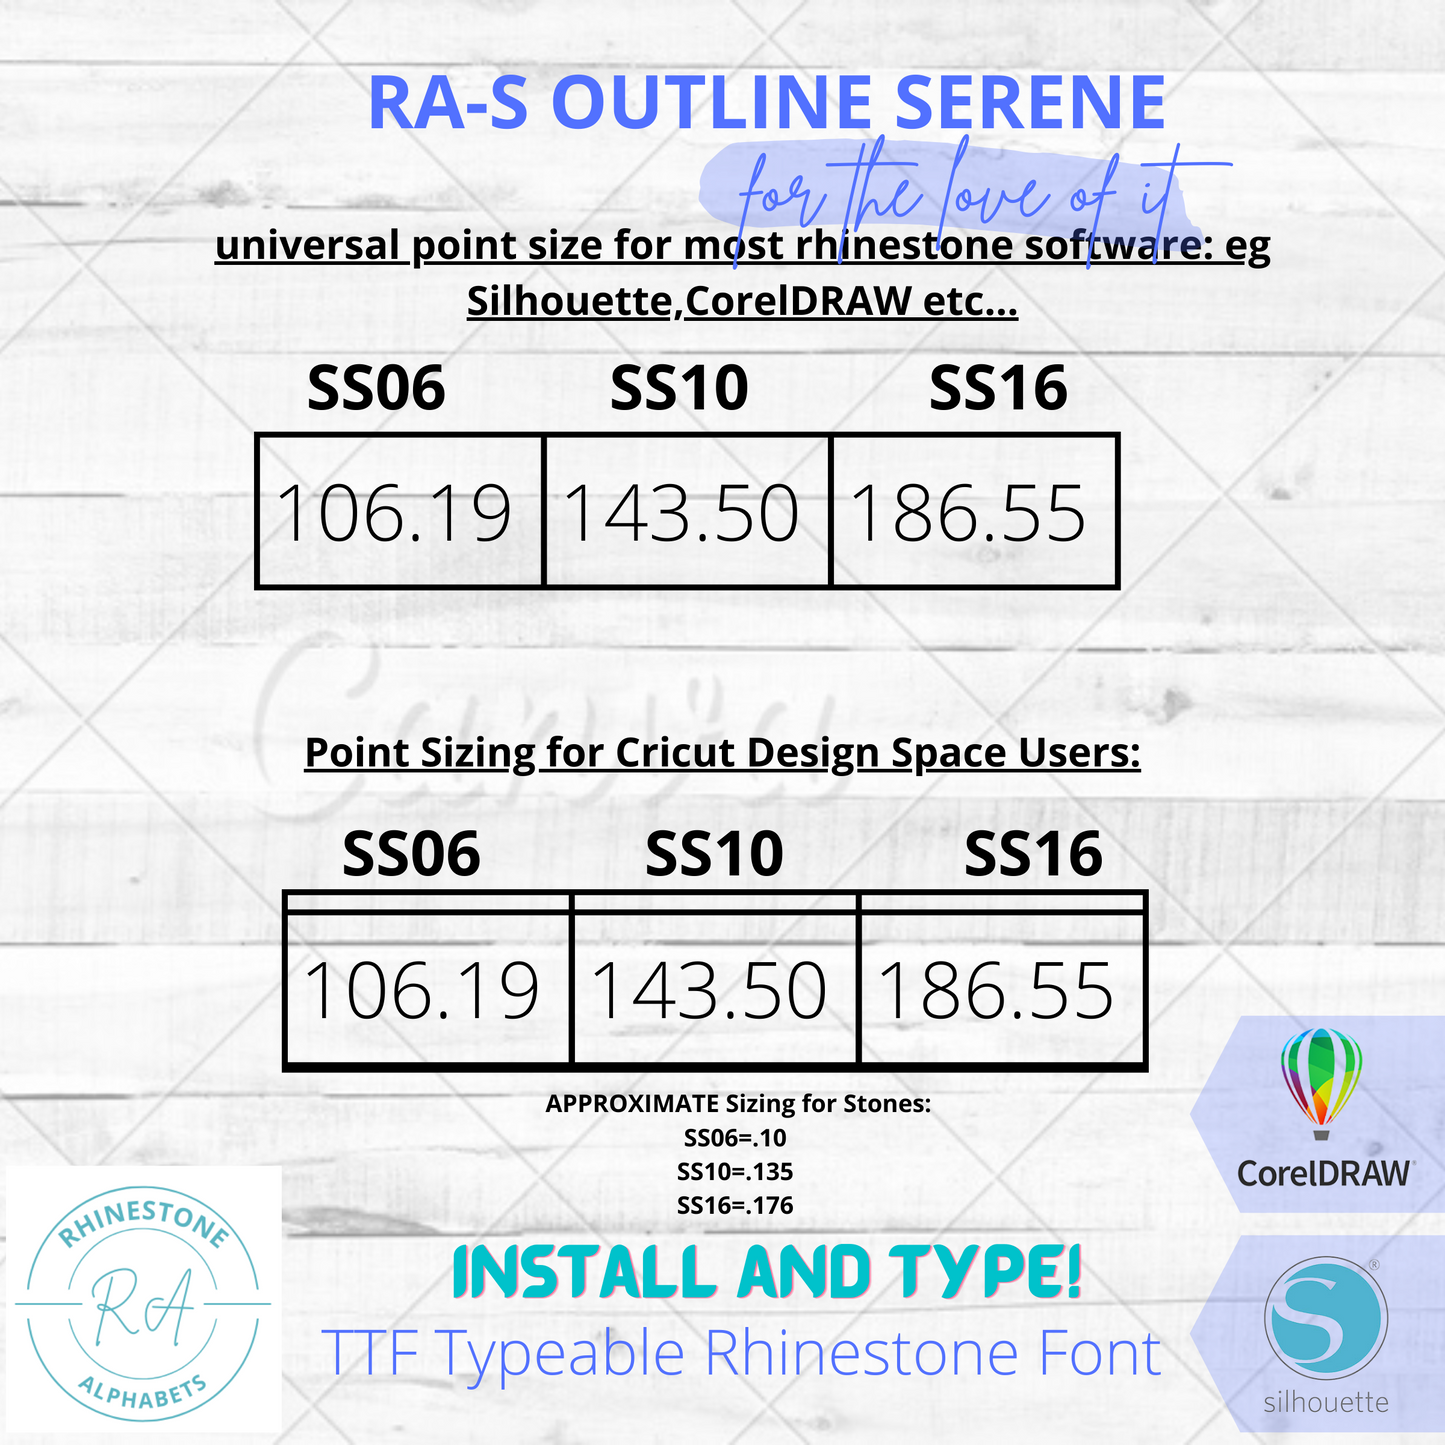 RA-S Outline Serene A ttf Truetype Rhinestone font